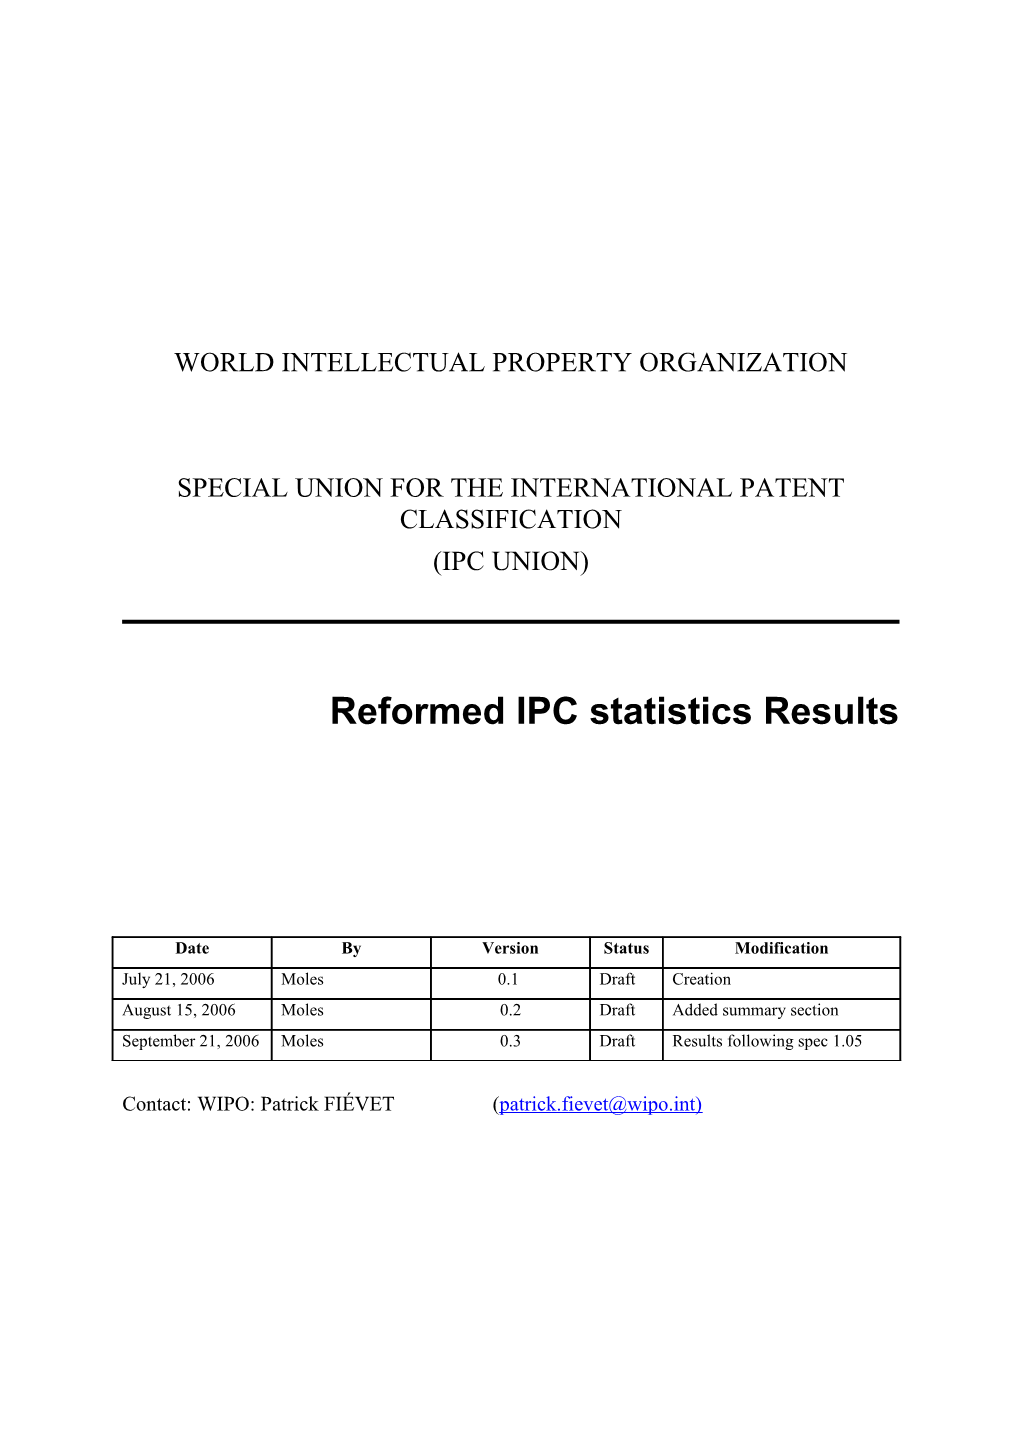 Reformed IPC Statistics Results